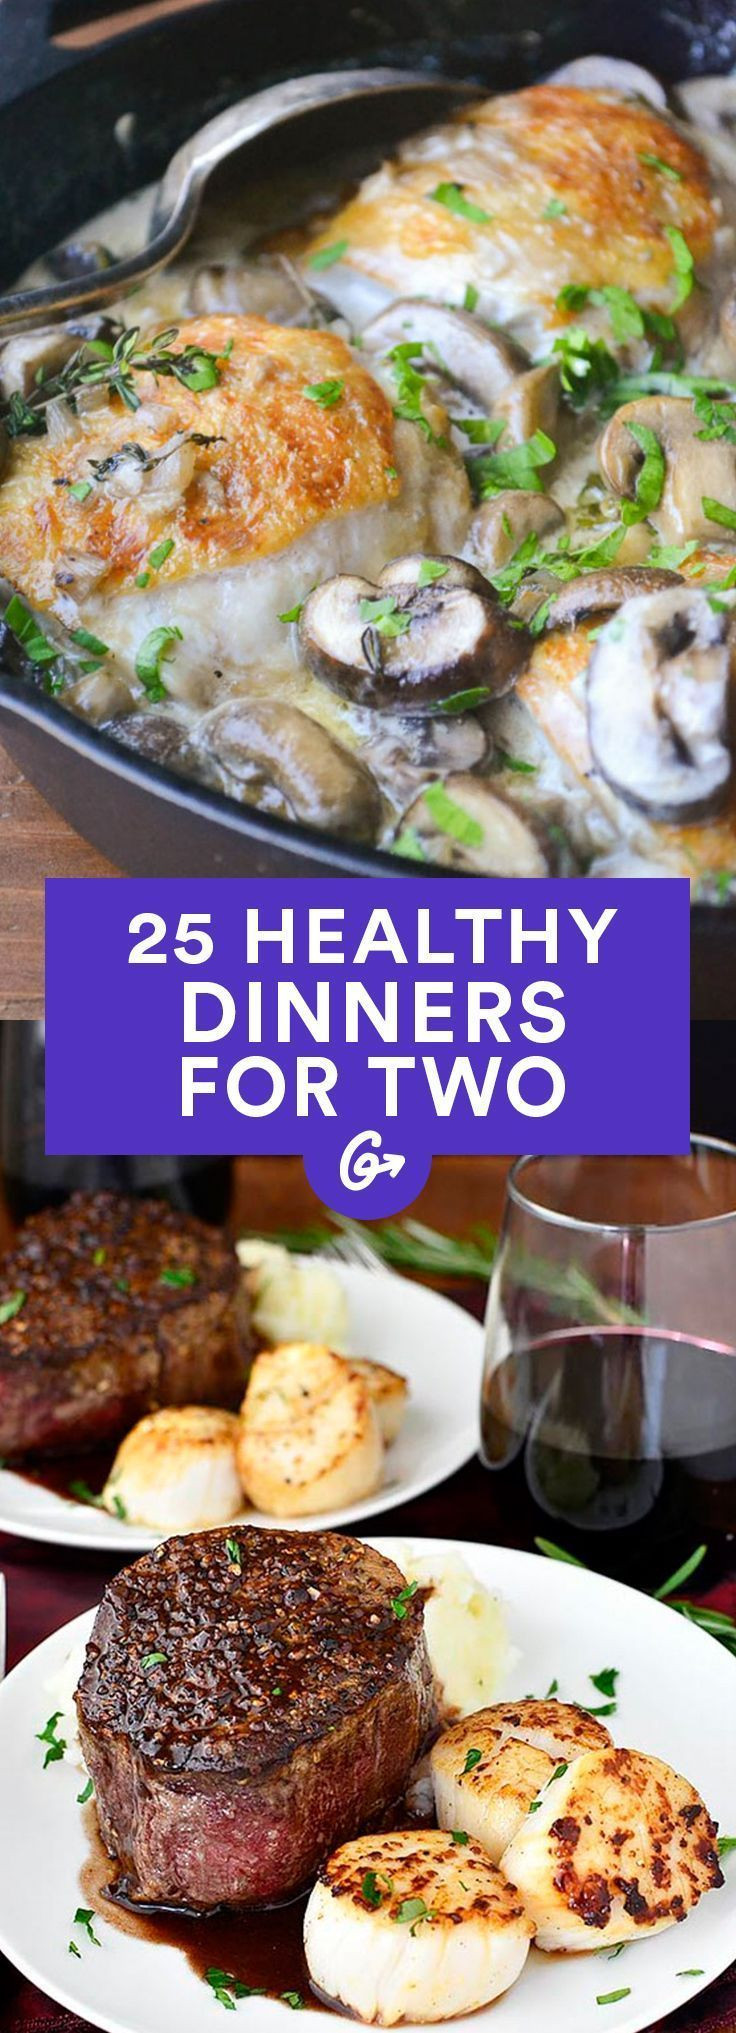 Healthy Dinner For 2
 100 Healthy Dinner Recipes on Pinterest